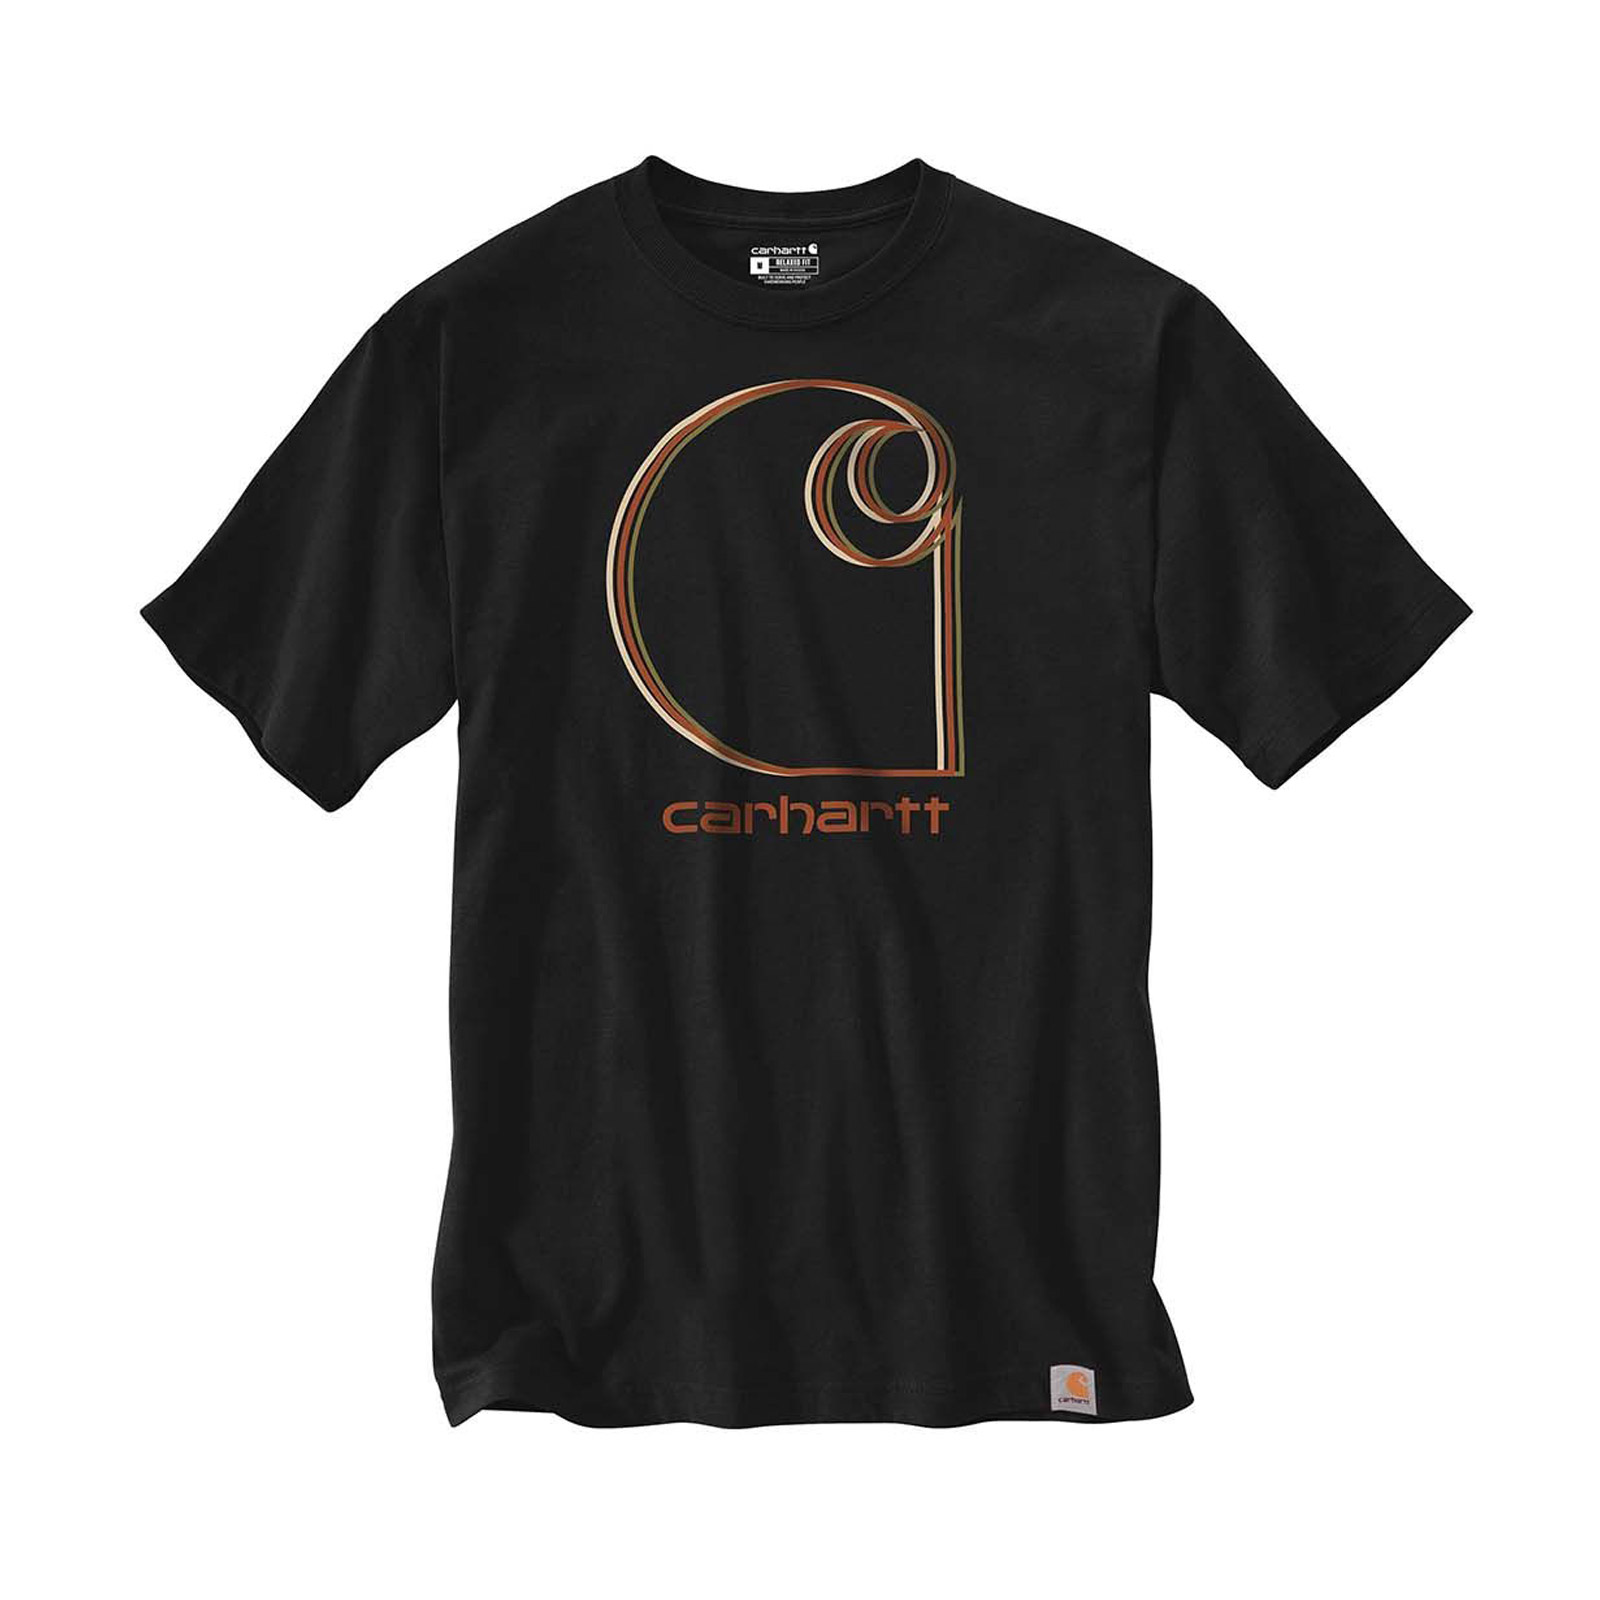 Carhartt C Graphic T-Shirt S/S Schwarz S